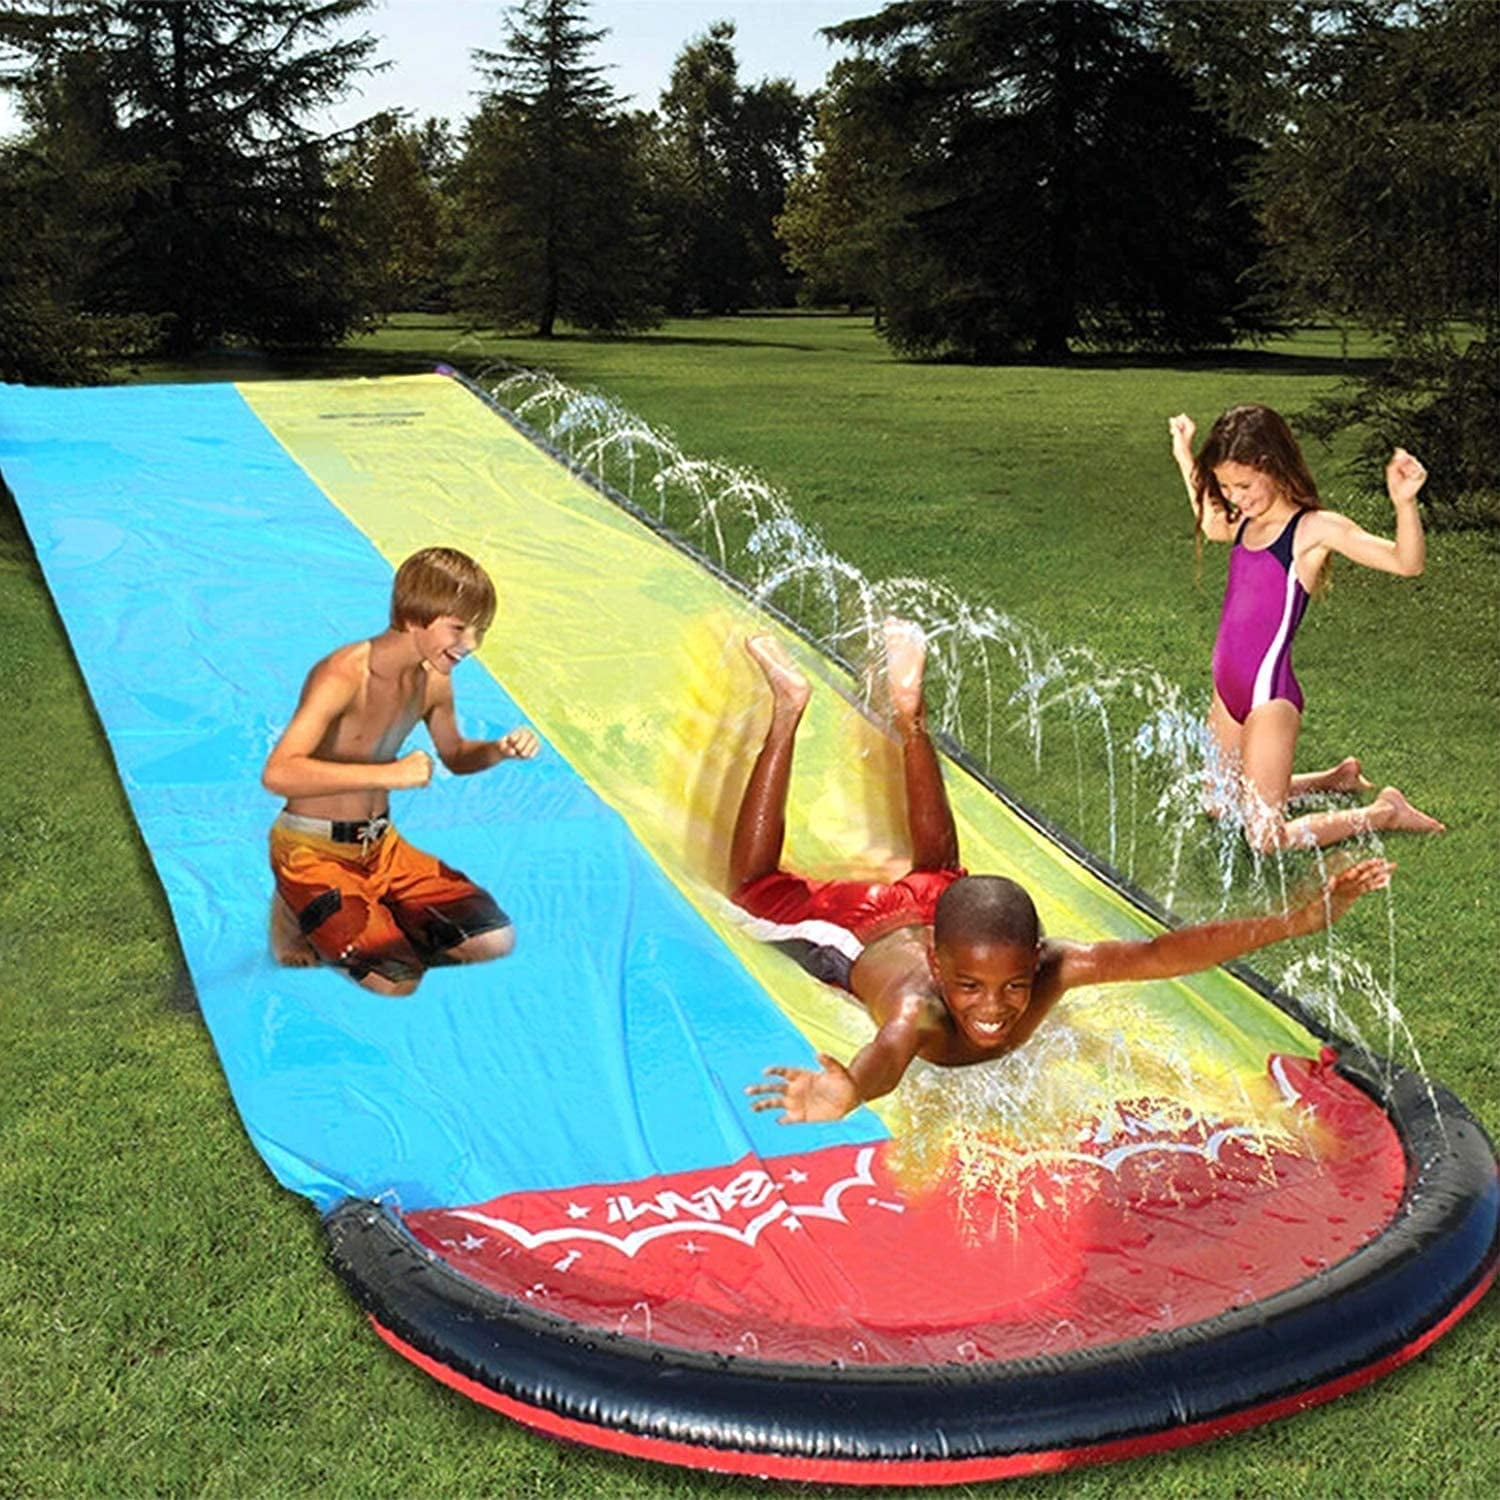 188X27.55 decwang Backyard Lawn Slip Slide Summer More Water Fun for Kids and Adults Speed Giant Waterslide 